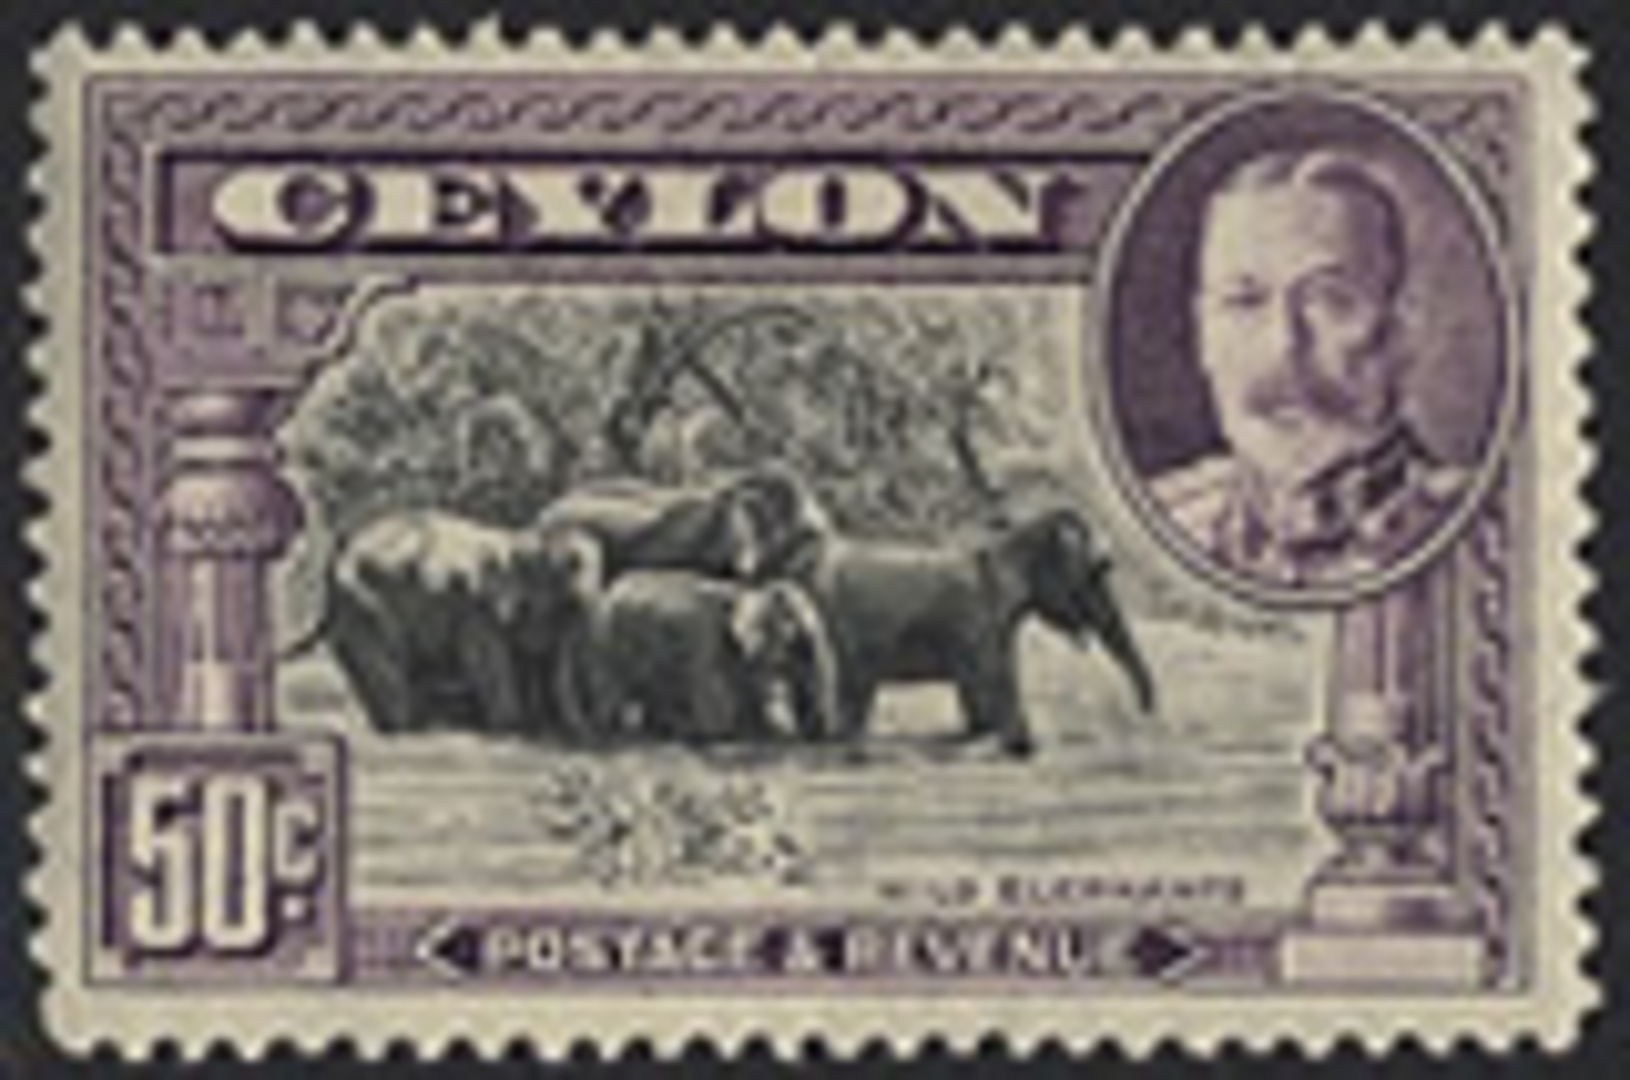 Cevlon postage stamps